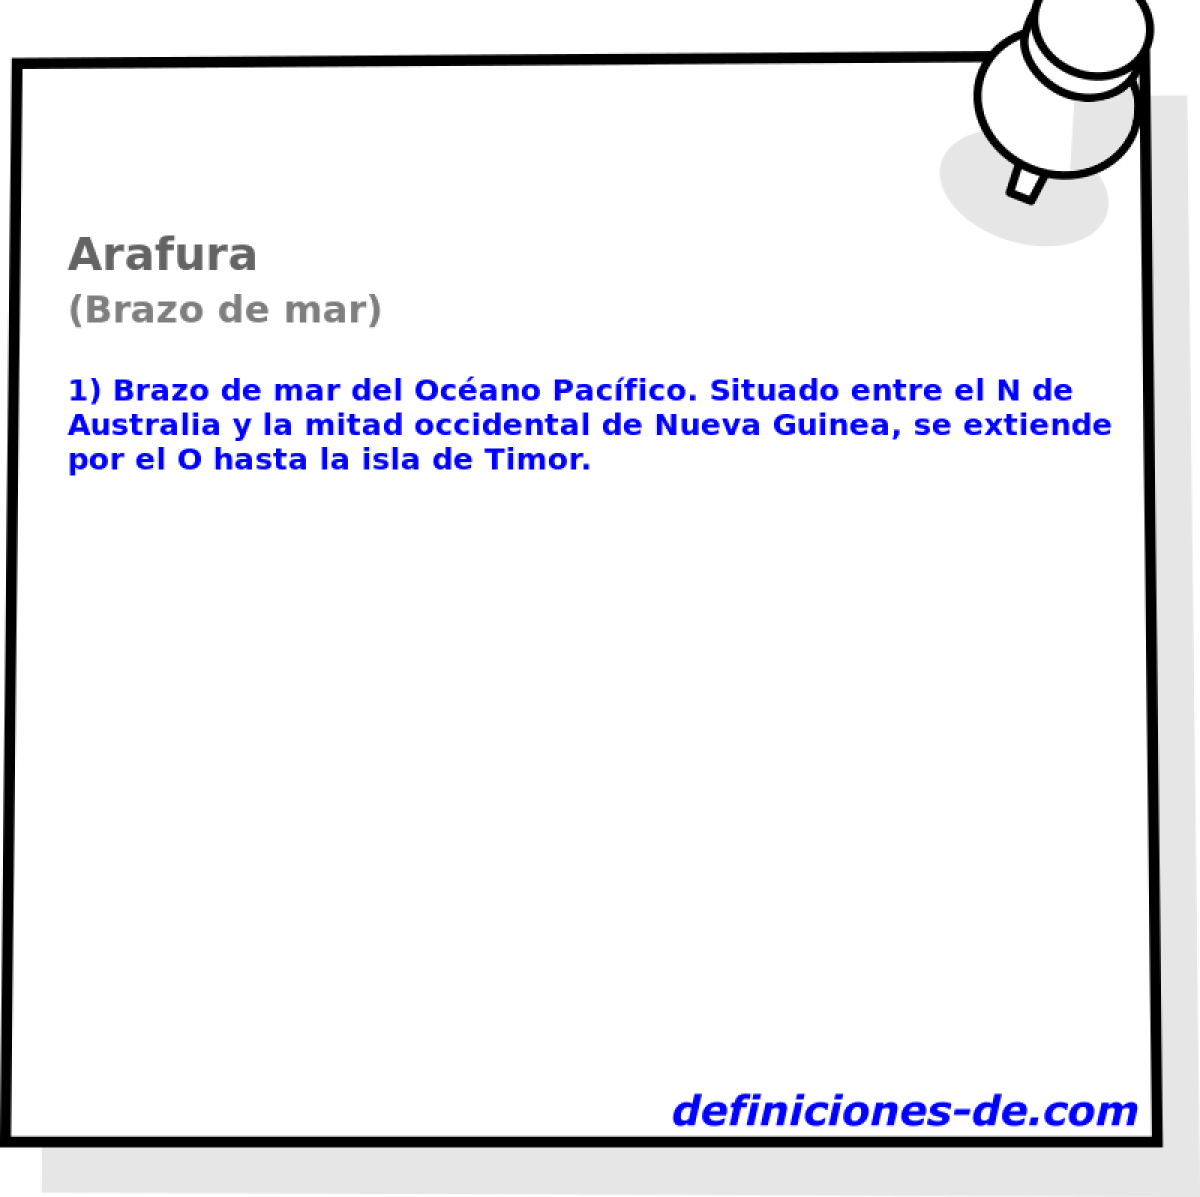 Arafura (Brazo de mar)